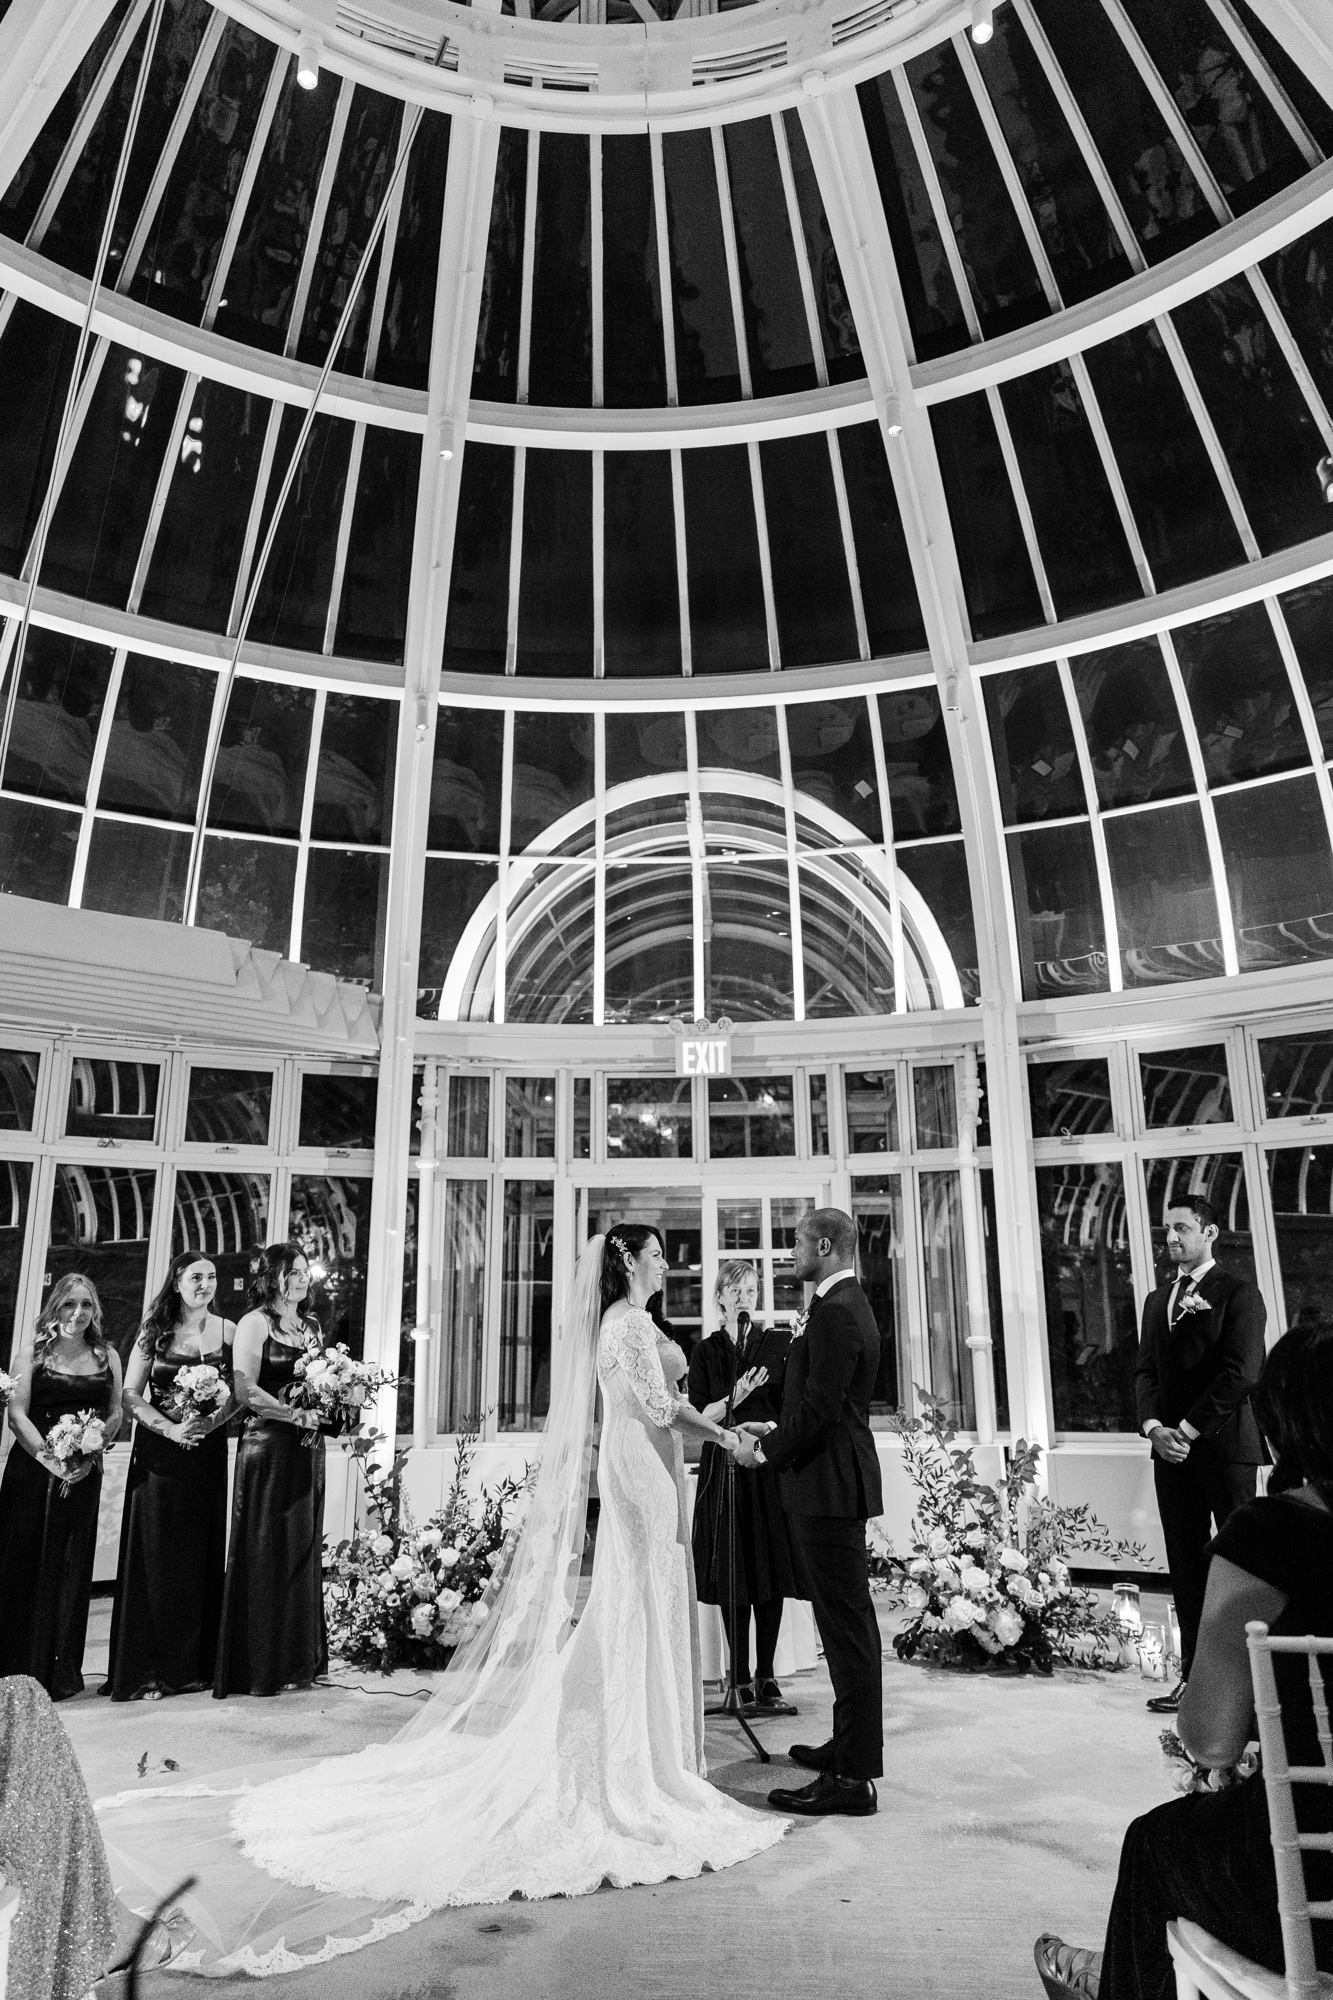 Dreamy Palm House Wedding Photos at Brooklyn Botanic Garden in Winter